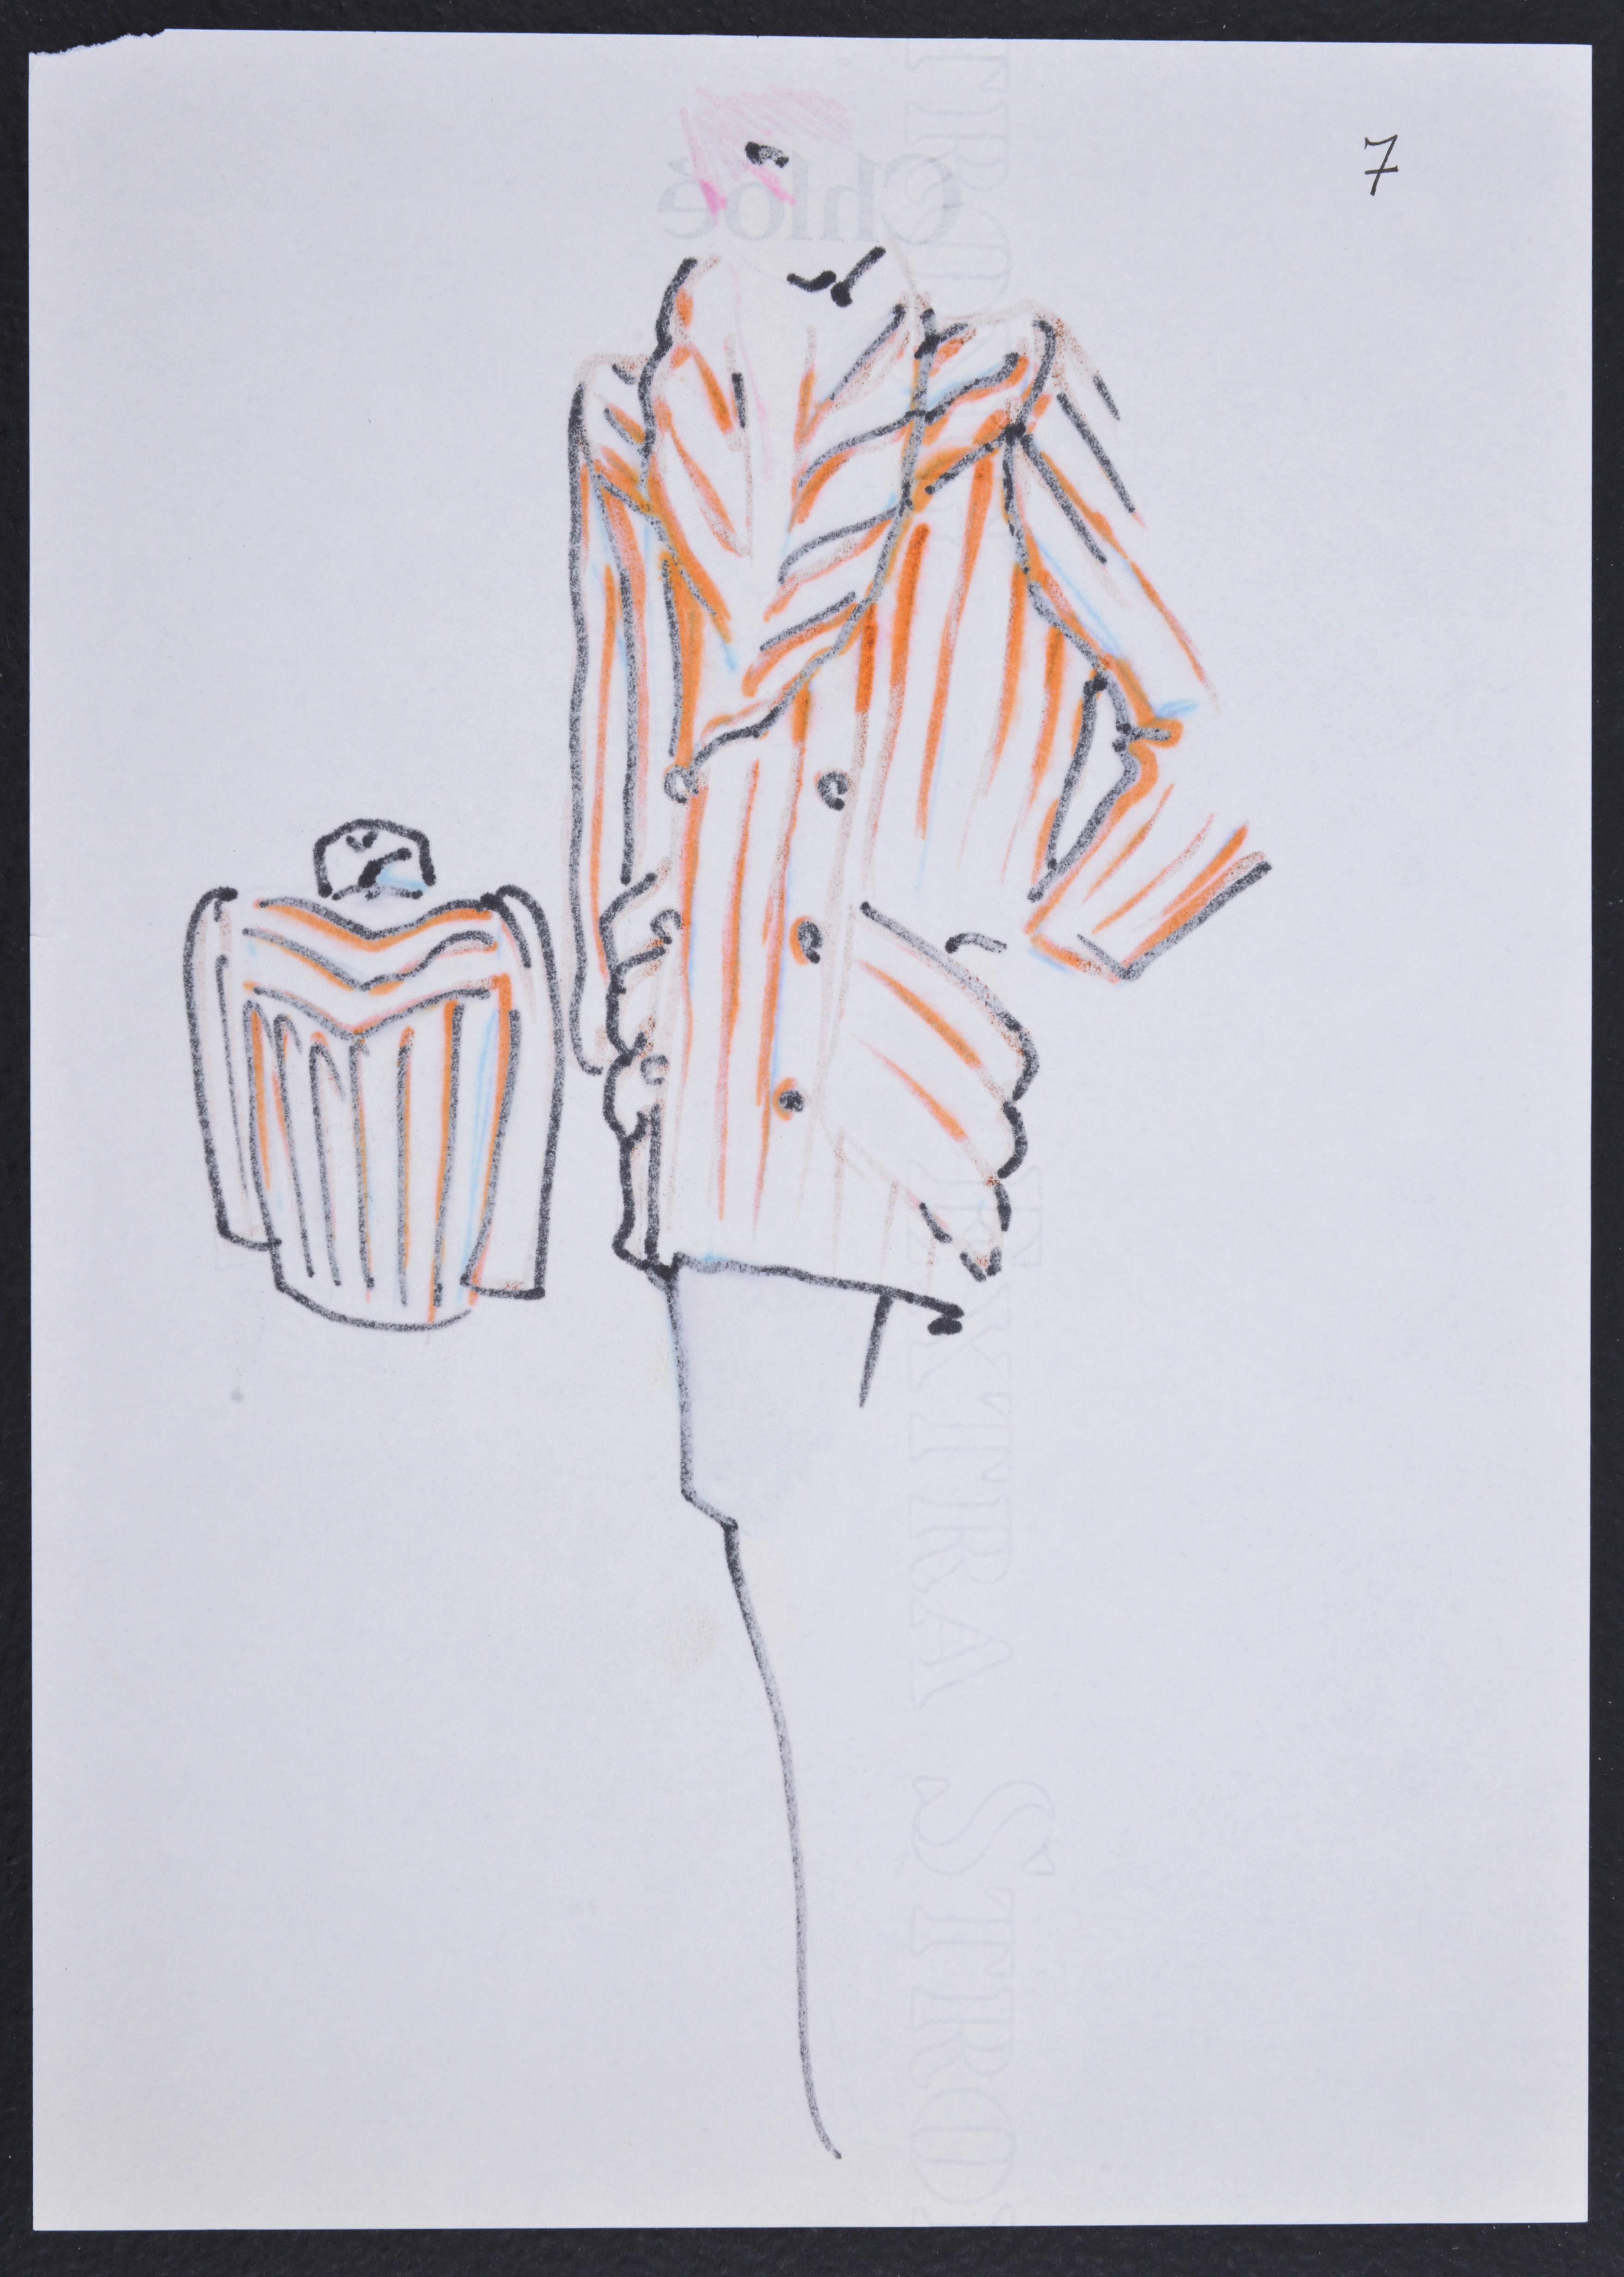 Artist/Designer; Manufacturer: Karl Lagerfeld (German, 1933-2019)
Marking(s); notes: Chloe imprint
Materials: mixed media (ink, pastel, pencil) on paper
Dimensions (H, W, D): 11.75